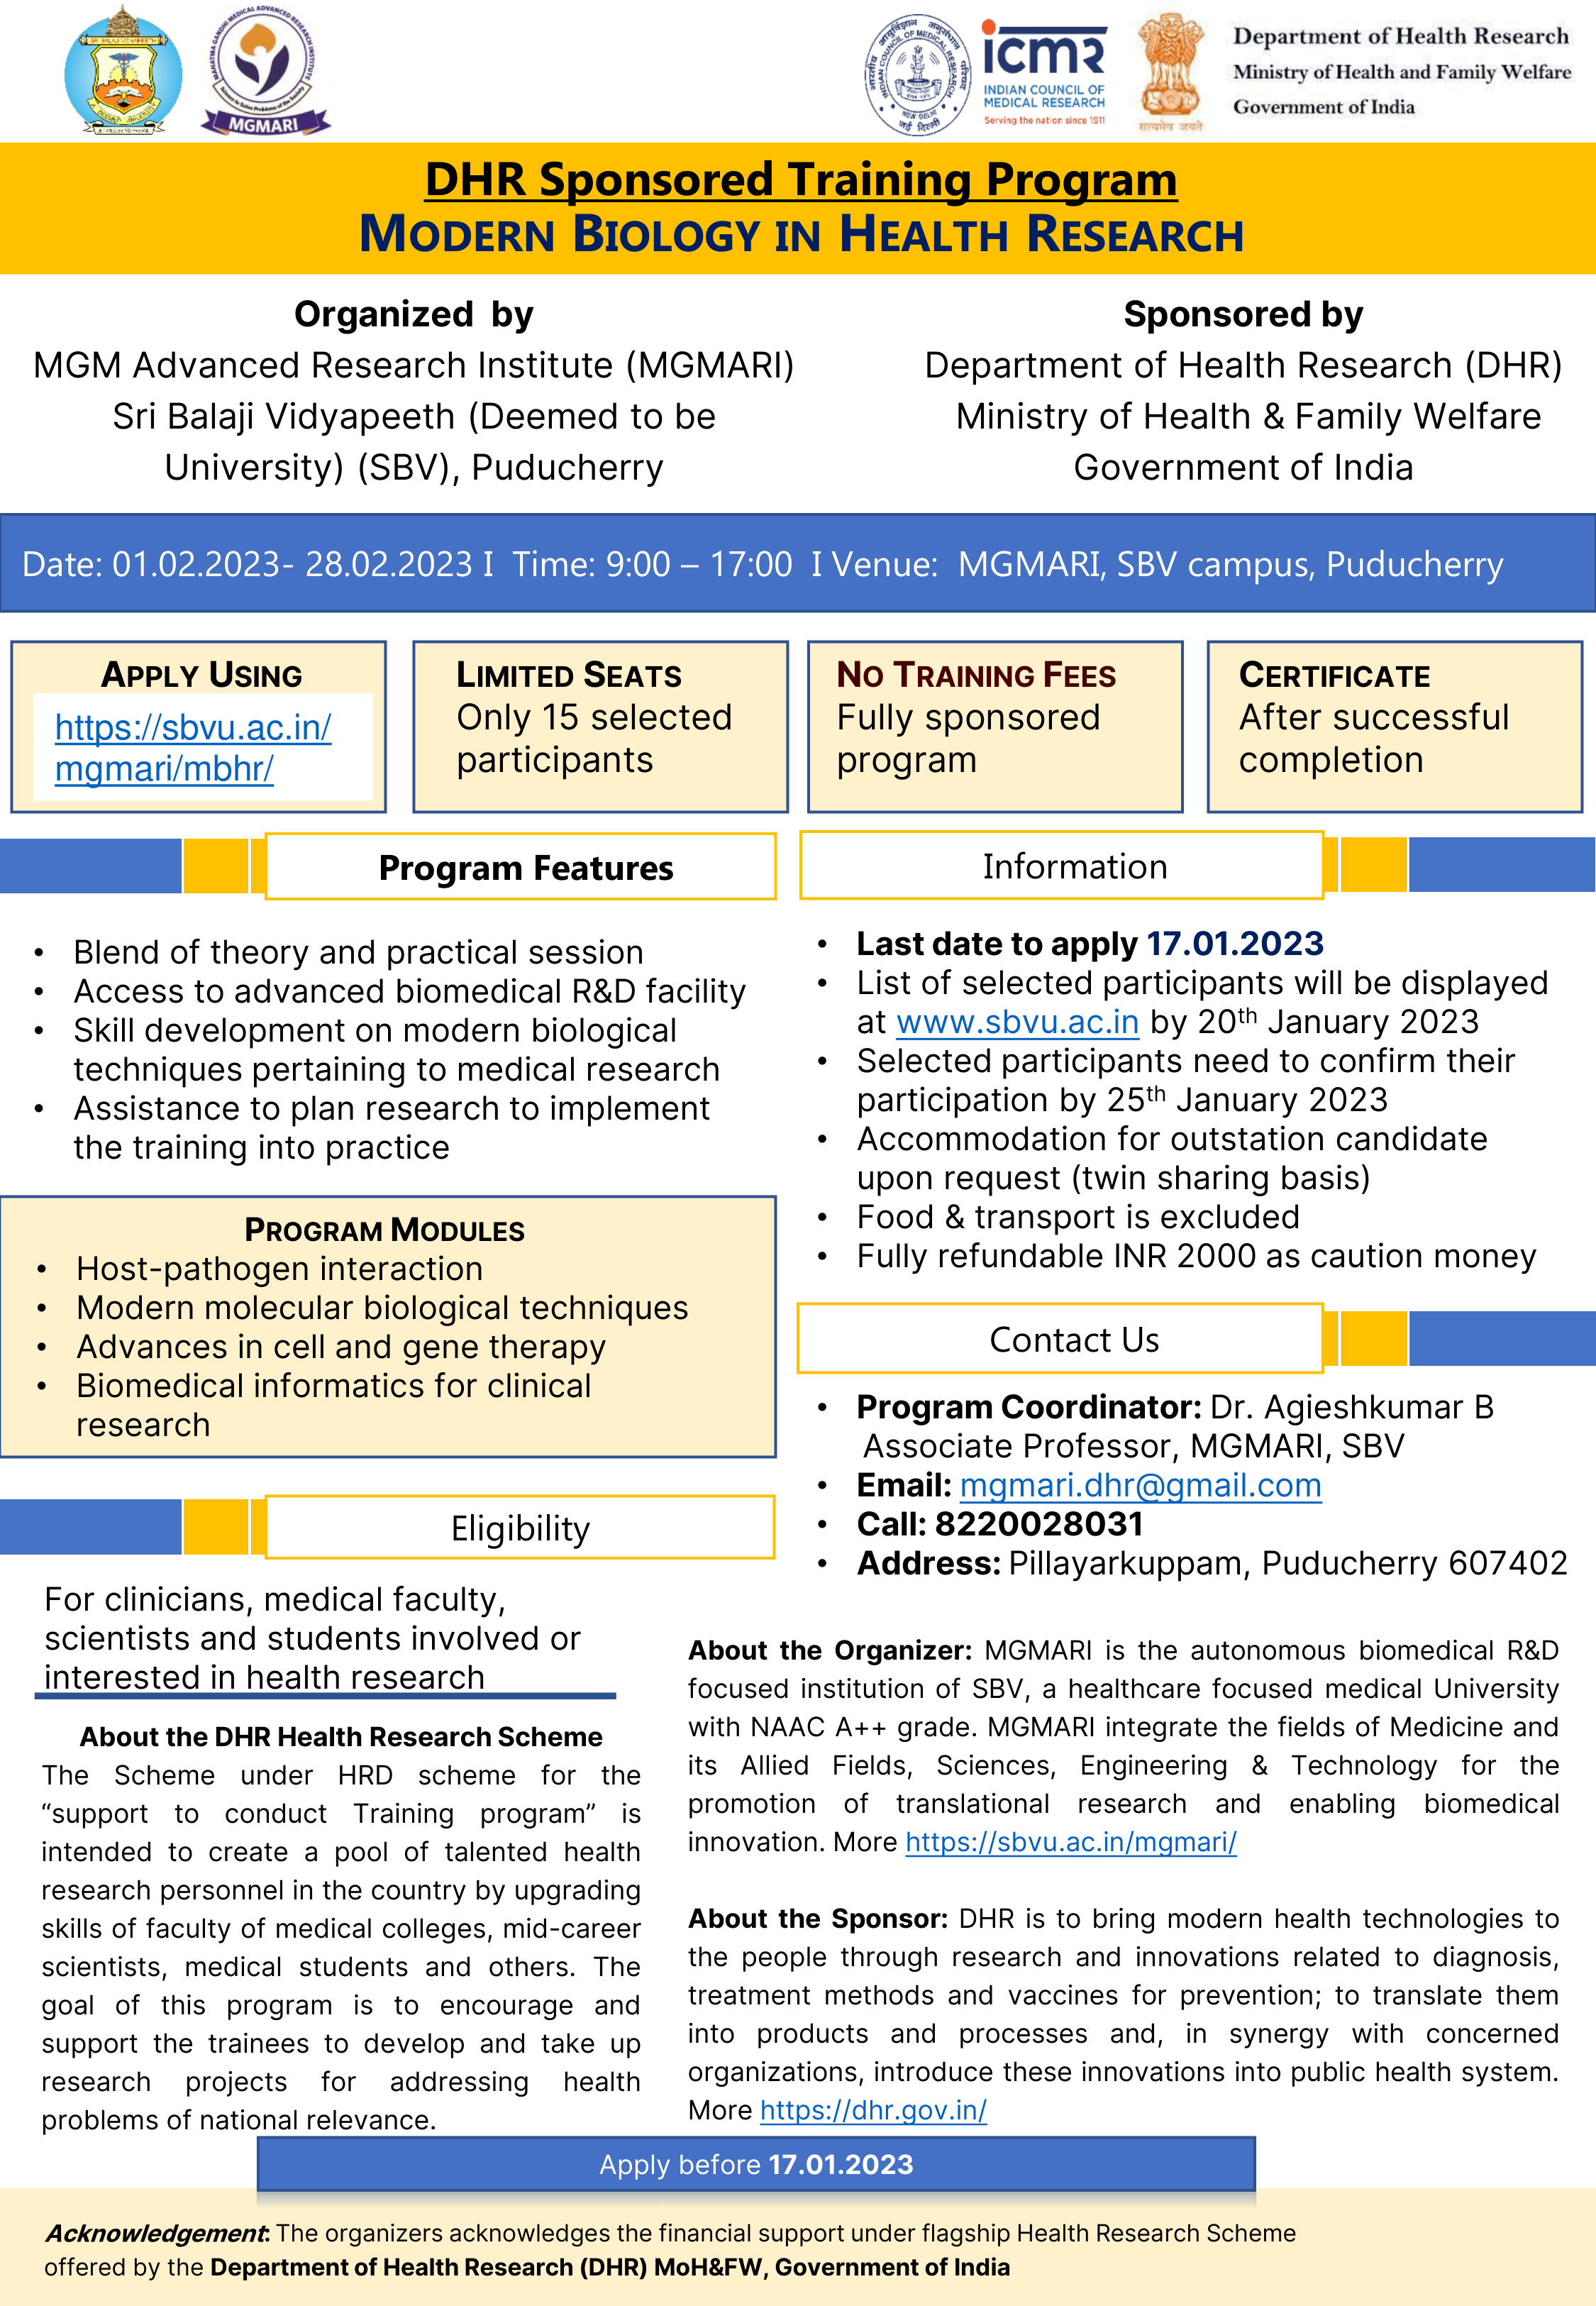 DHR Sponsored Training Program - Modern Biology in Health Research -  IndiaBioscience